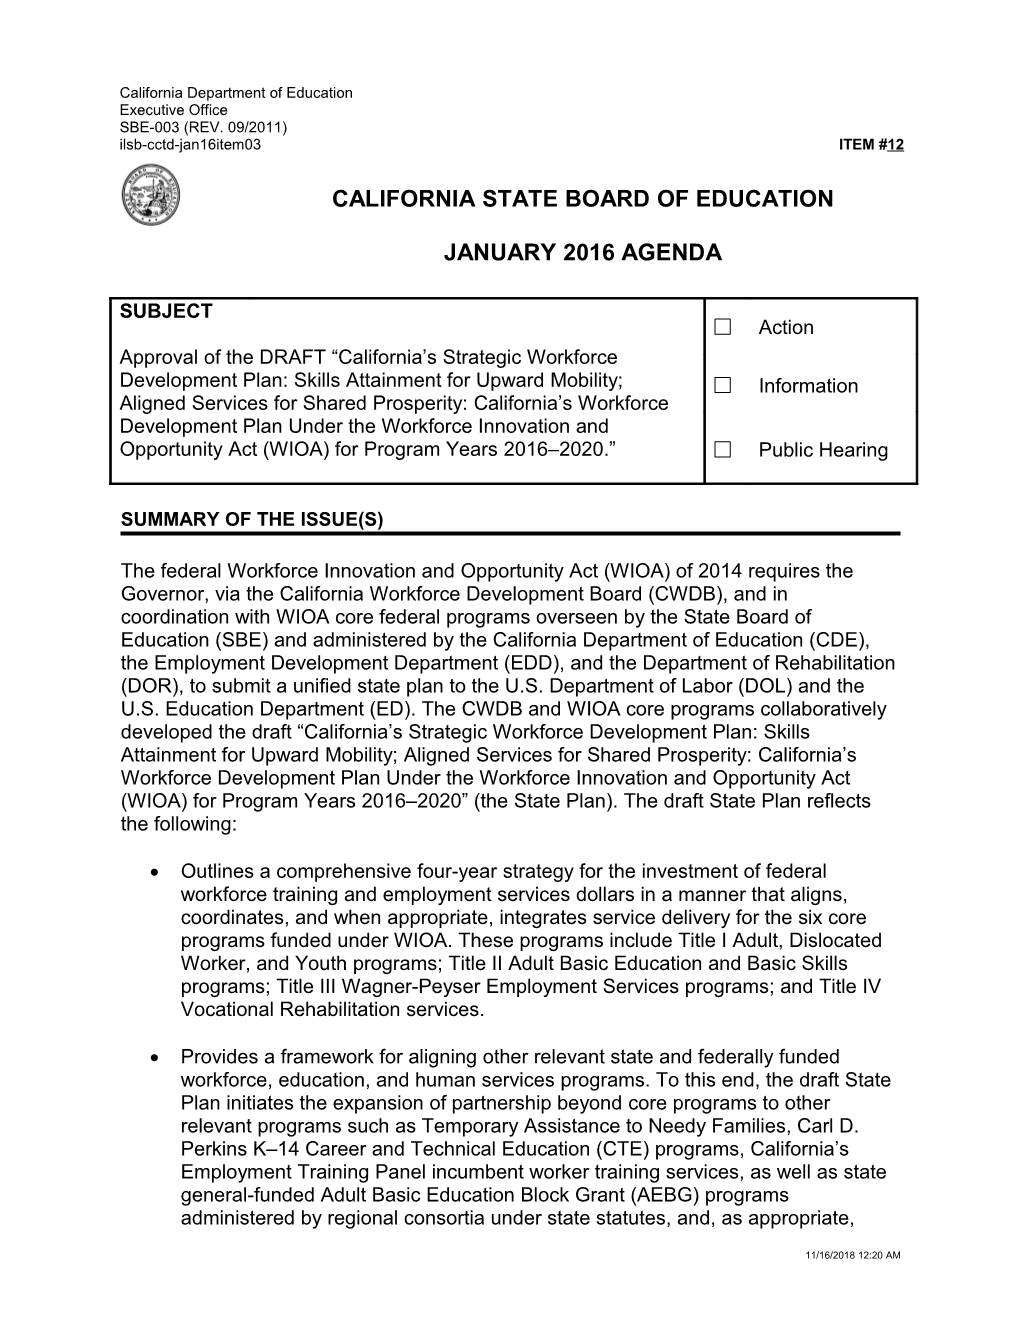 January 2016 Agenda Item 12 - Meeting Agendas (CA State Board of Education)